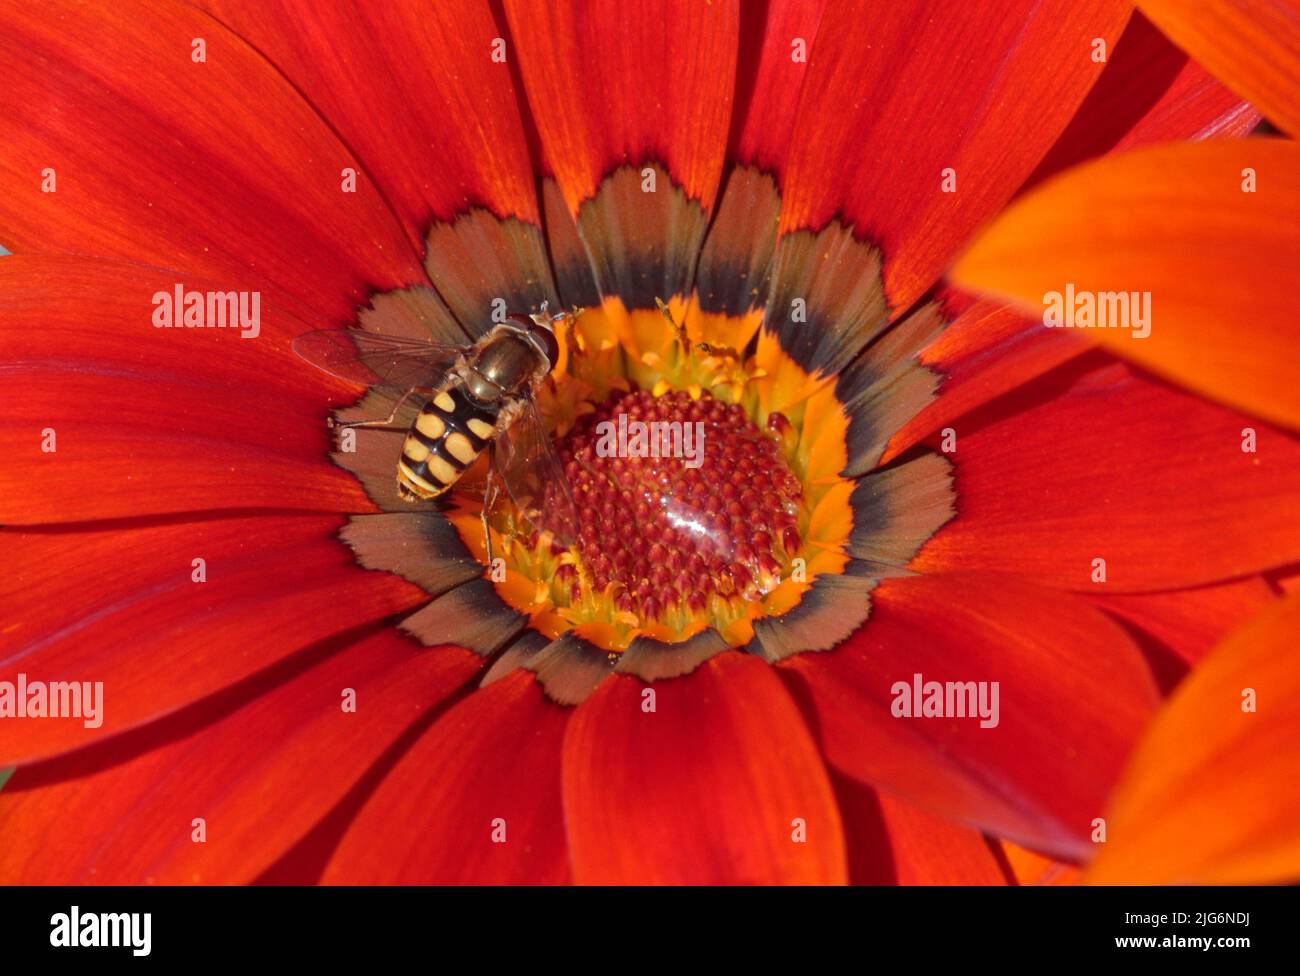 Orange Gazania Flower with Hoverfly Stock Photo